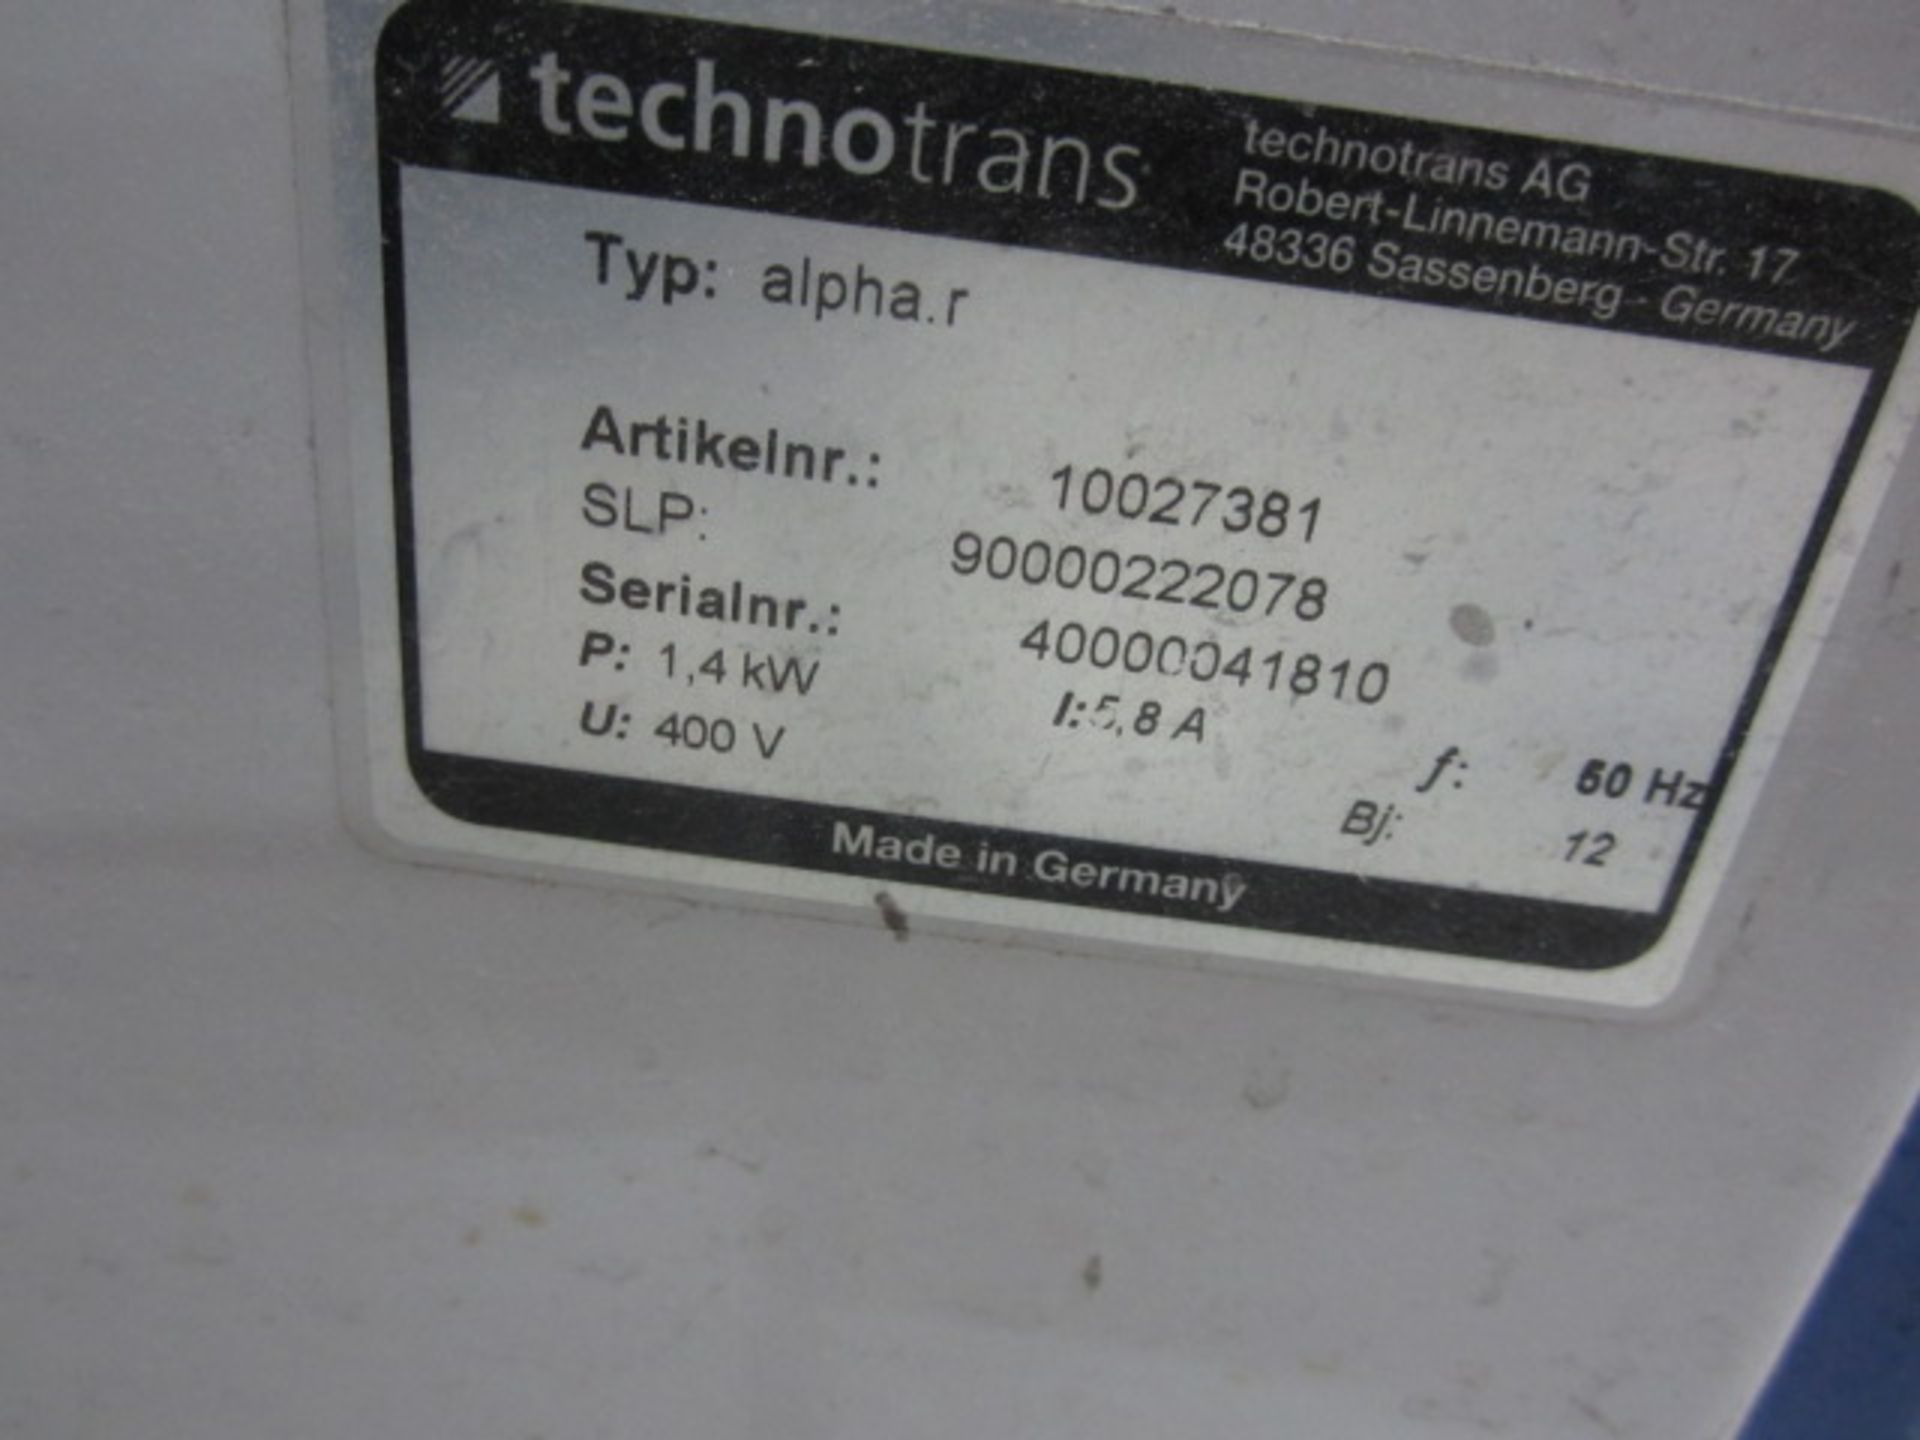 Technotrans Alpha.r additive dosing pump, Artikel no. 10027381, SLP 900000222078, serial no. - Image 6 of 6